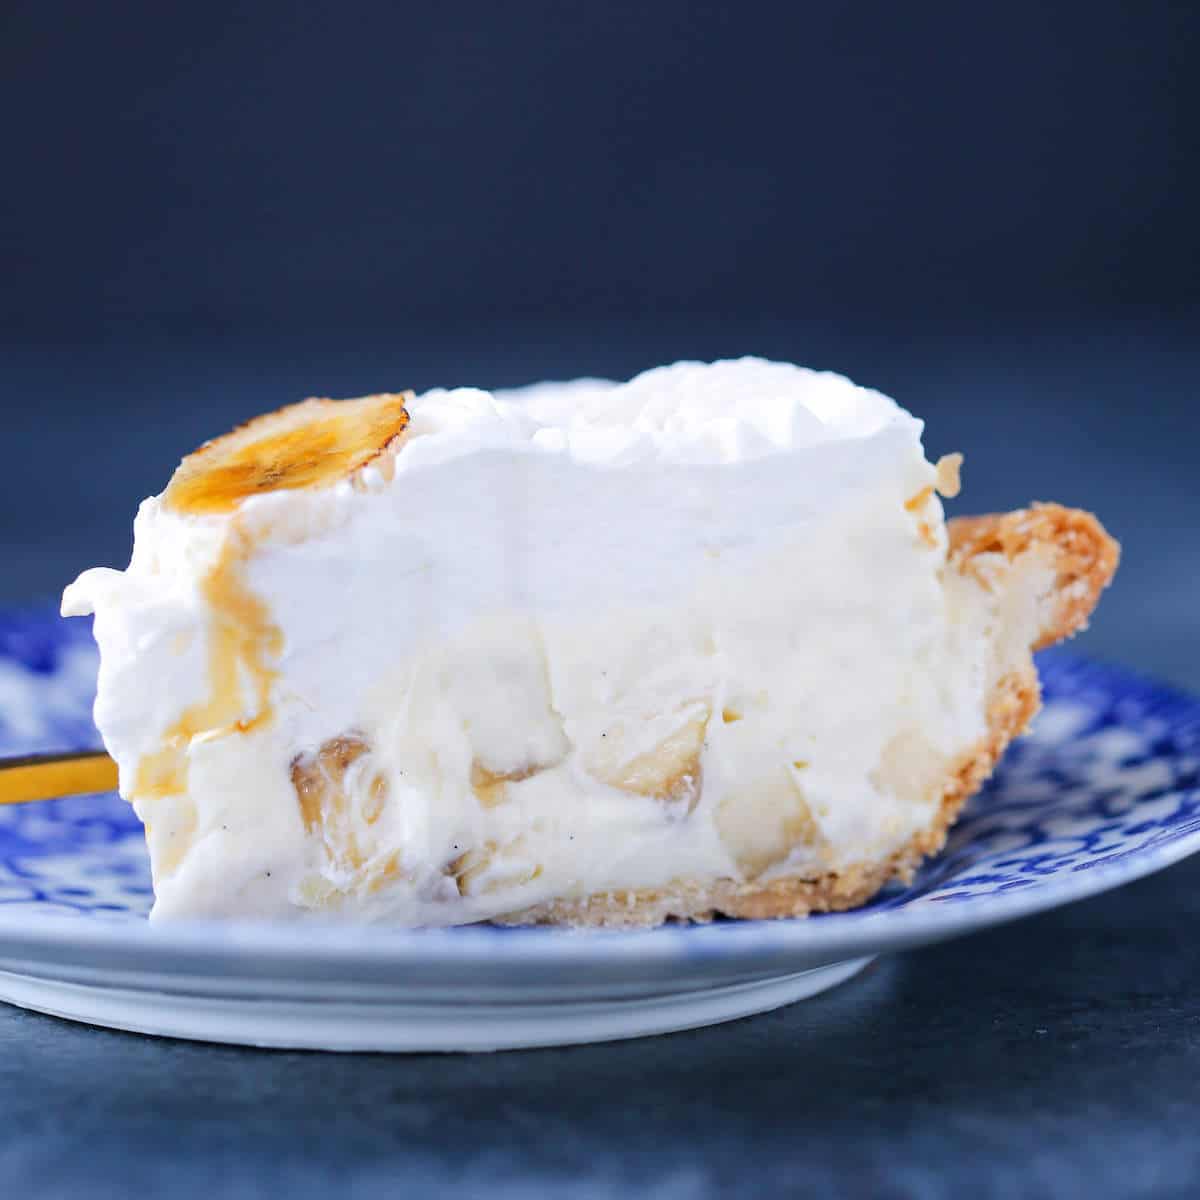 Banana Cream Pie slice on blue plate